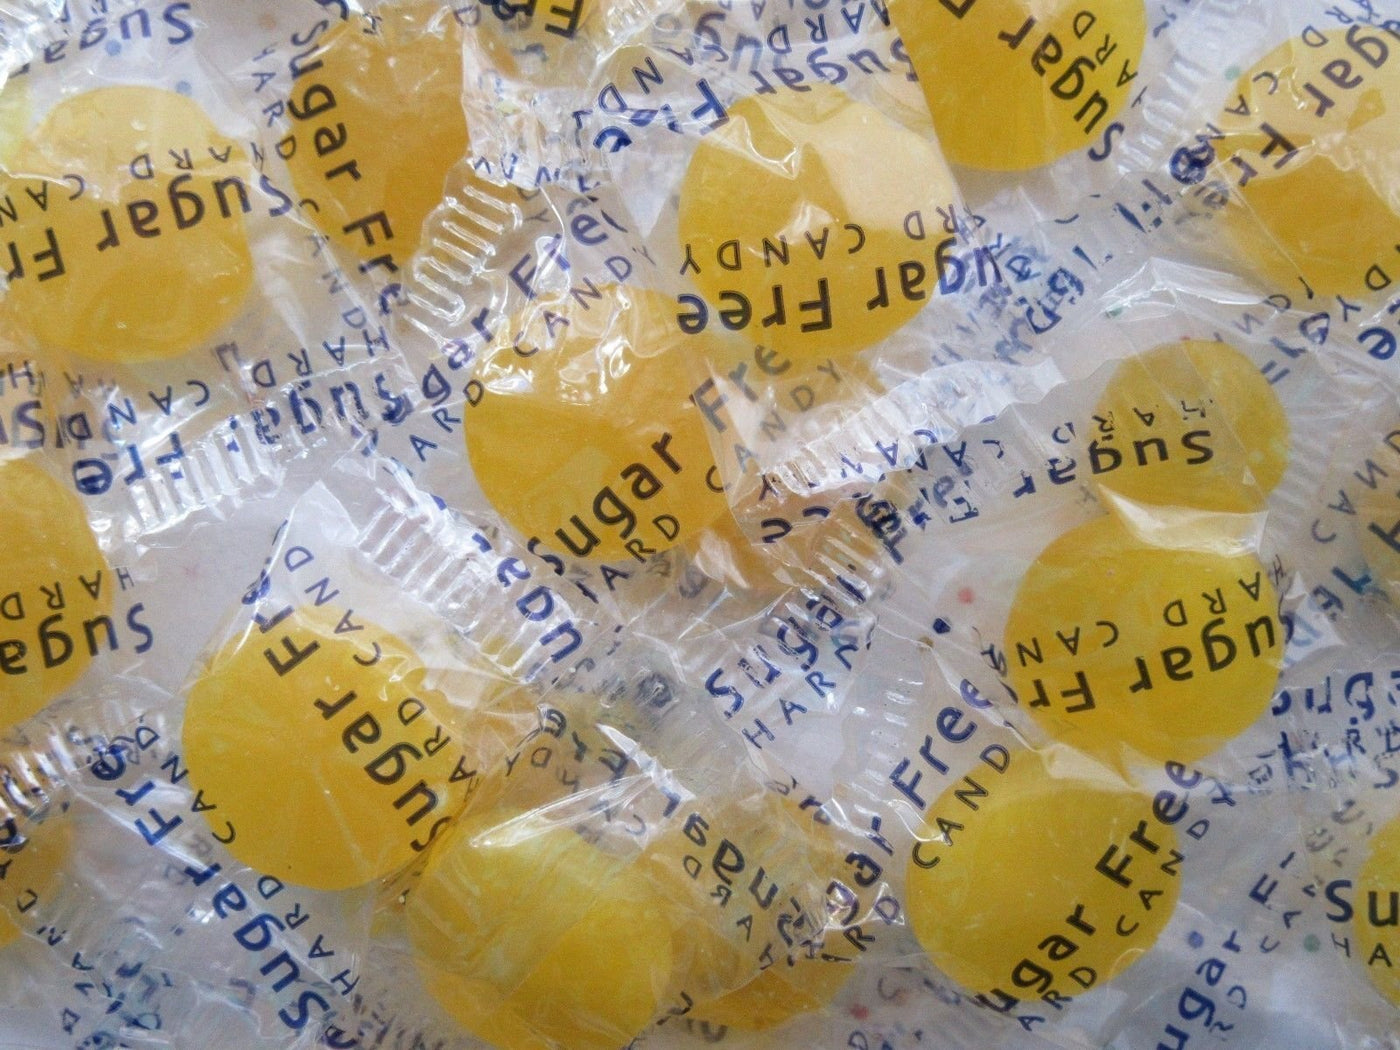 Coastal Bay Fat / SUGAR FREE Lemon 16oz Flavored Hard Candy Candies BFR